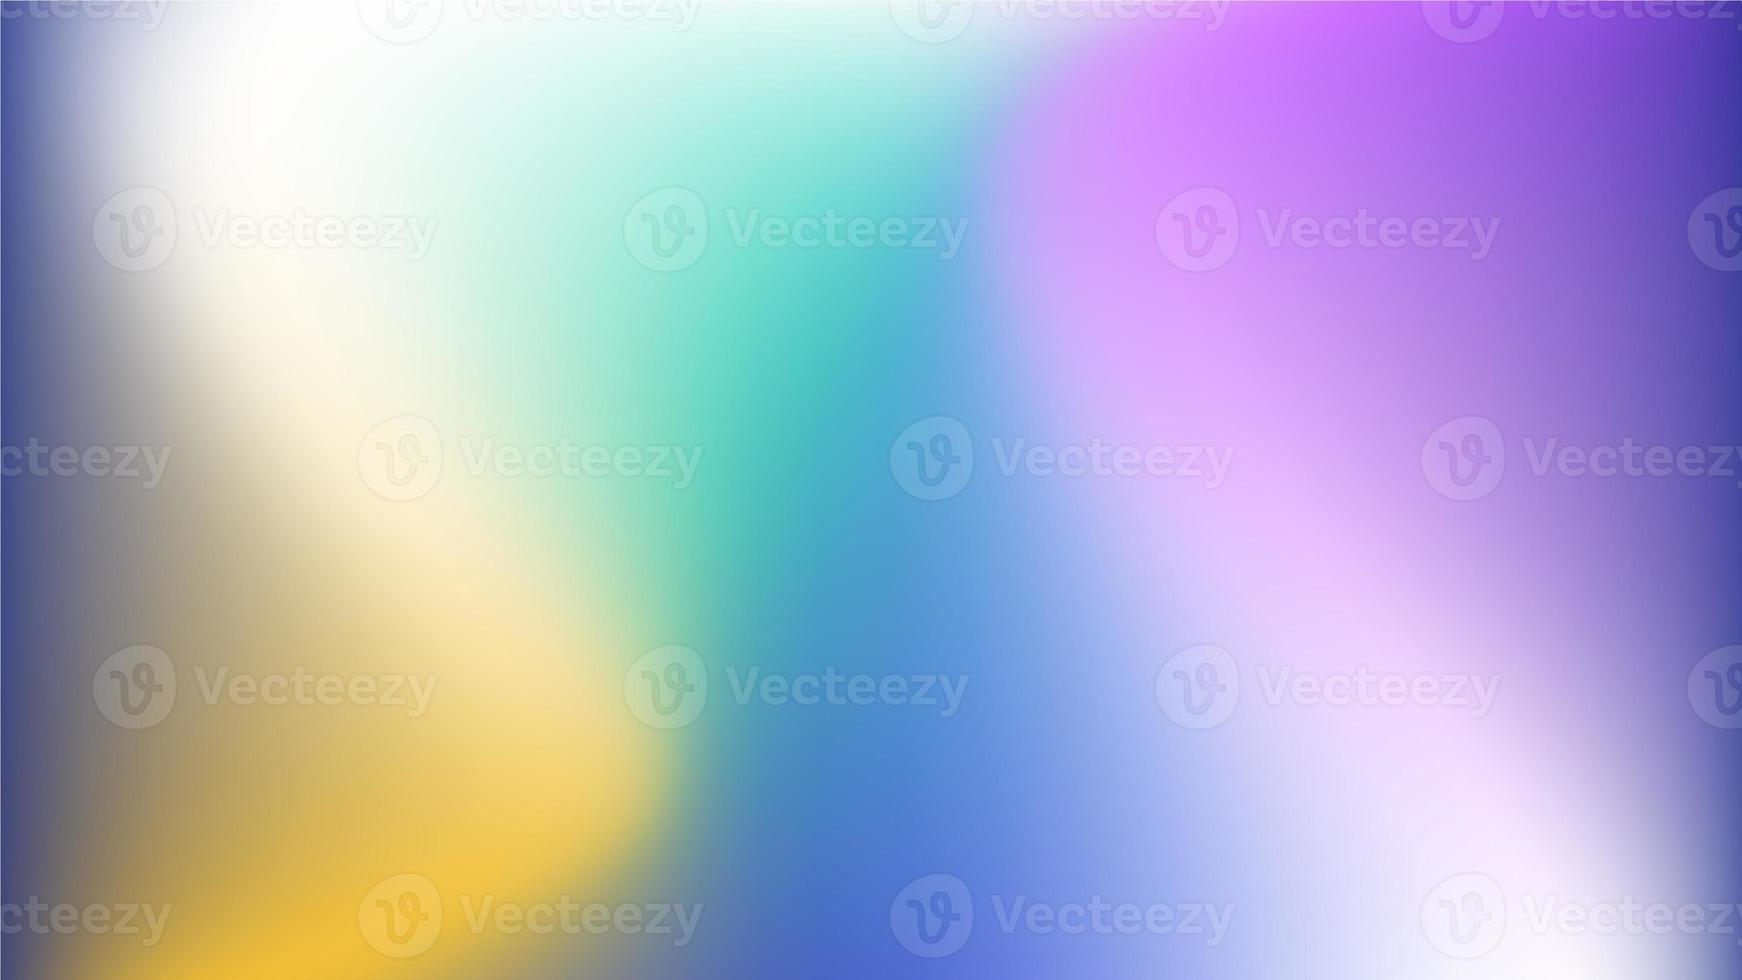 fundo desfocado abstrato colorido. transições suaves de cores iridescentes. gradiente colorido. pano de fundo do arco-íris foto